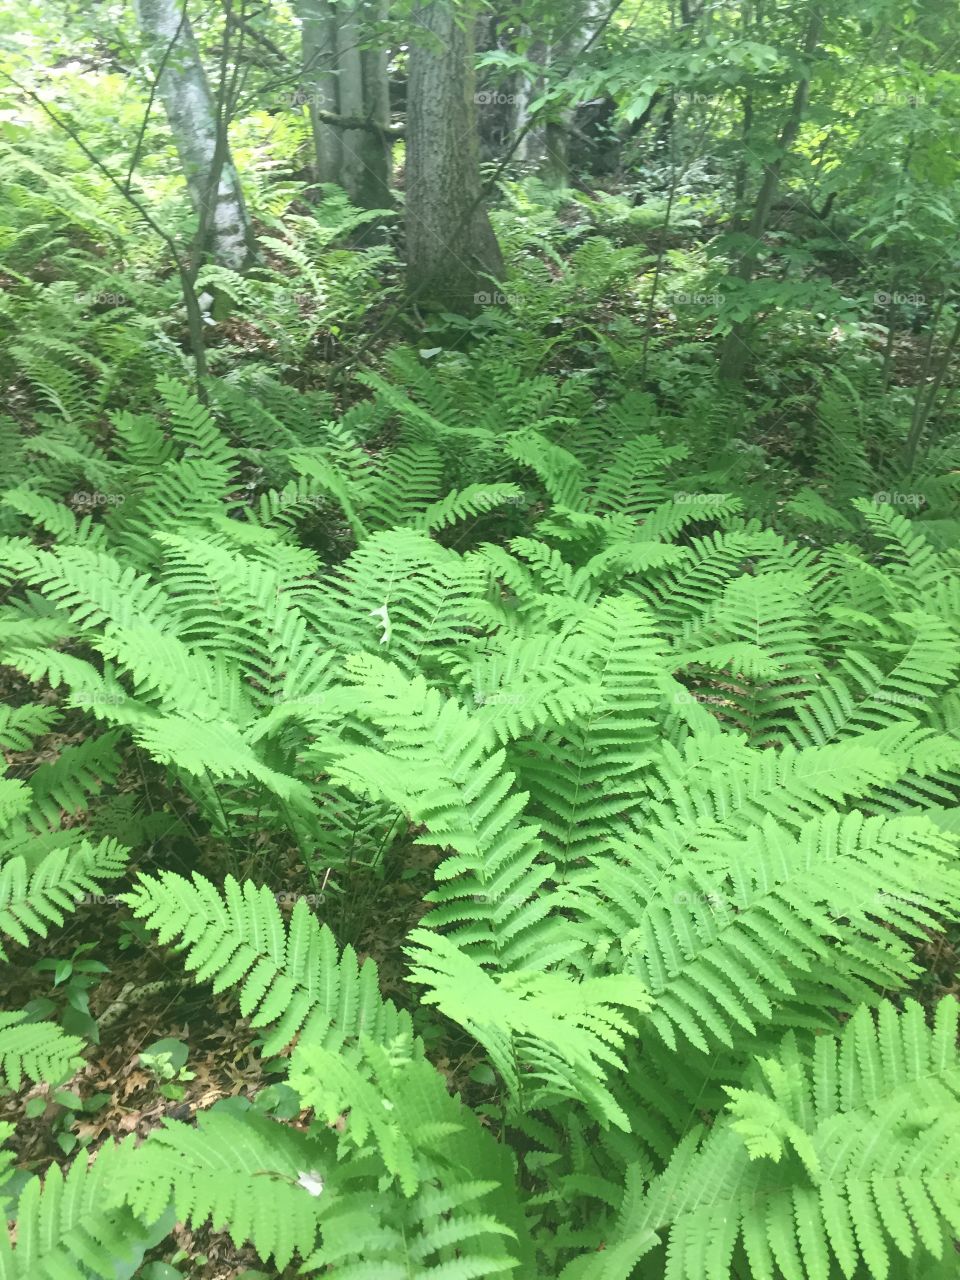 A hillside of bright green ferns blanketing a forest floor.